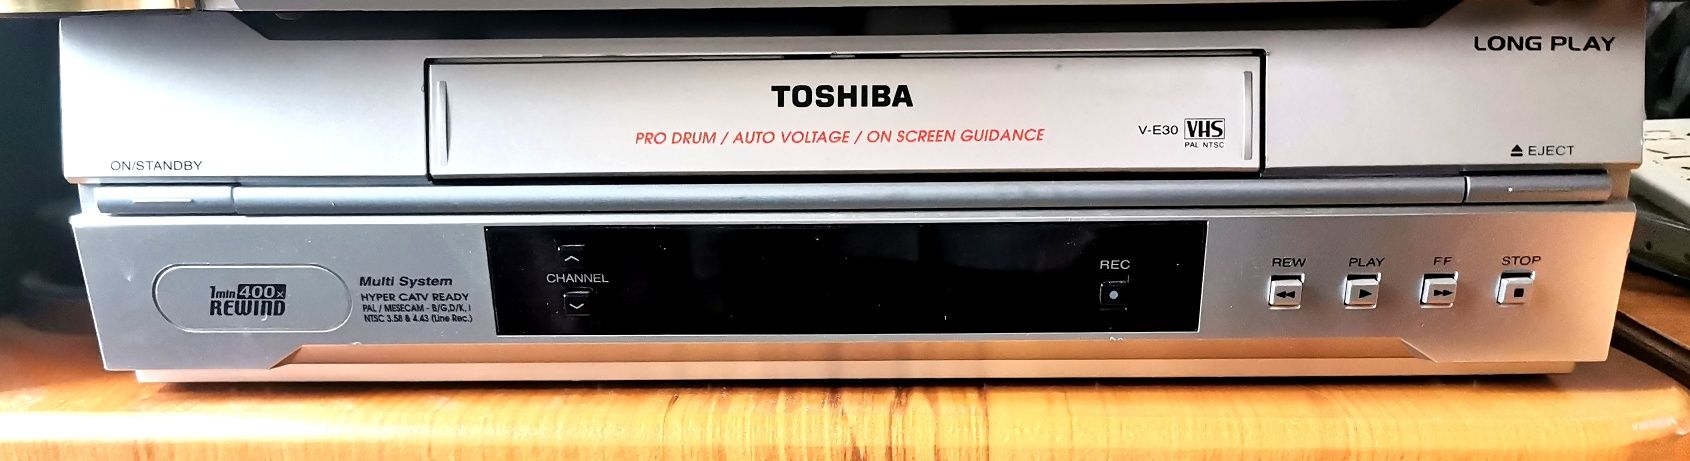 Відеомагнітофон Toshiba V-E30